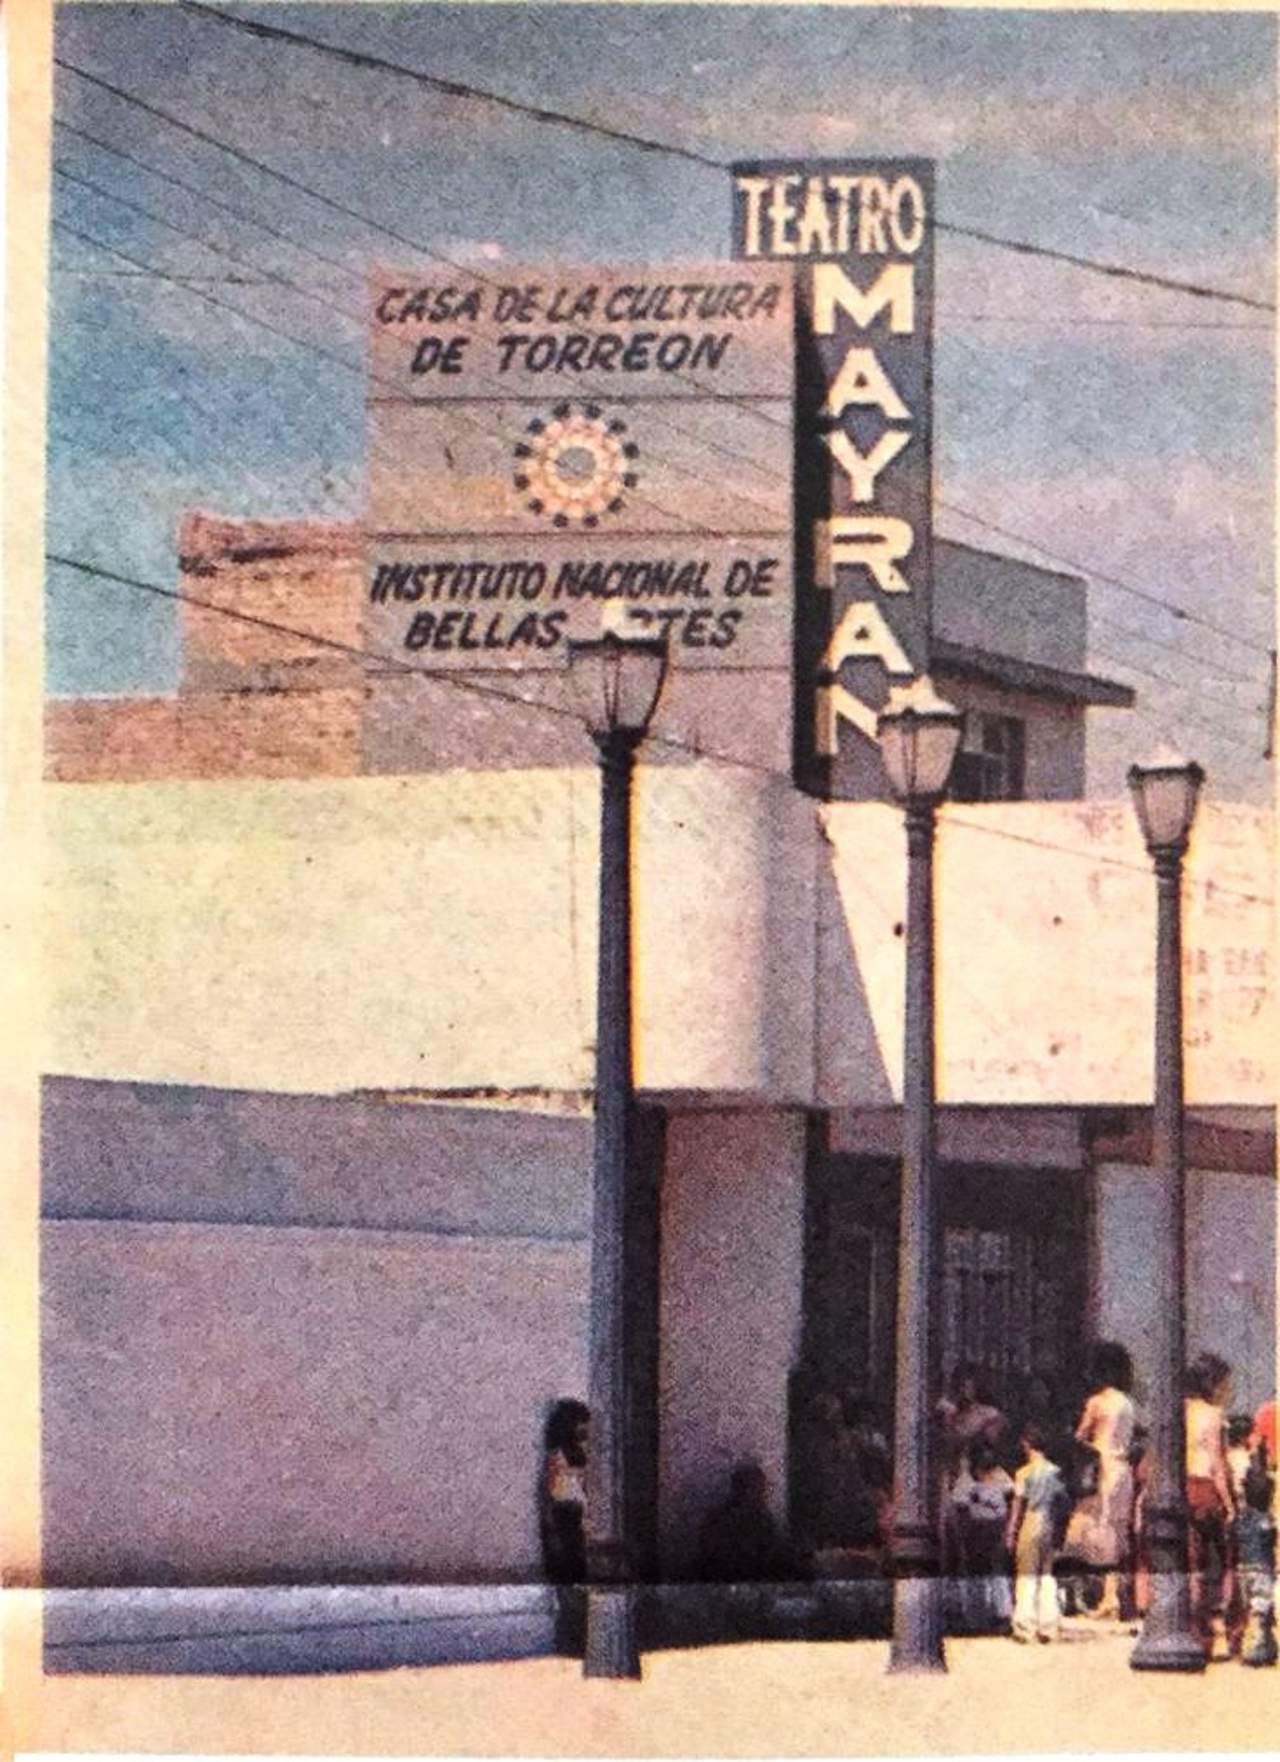 Teatro Mayrán (Imagen tomada del blog del Dr. Samuel Banda)